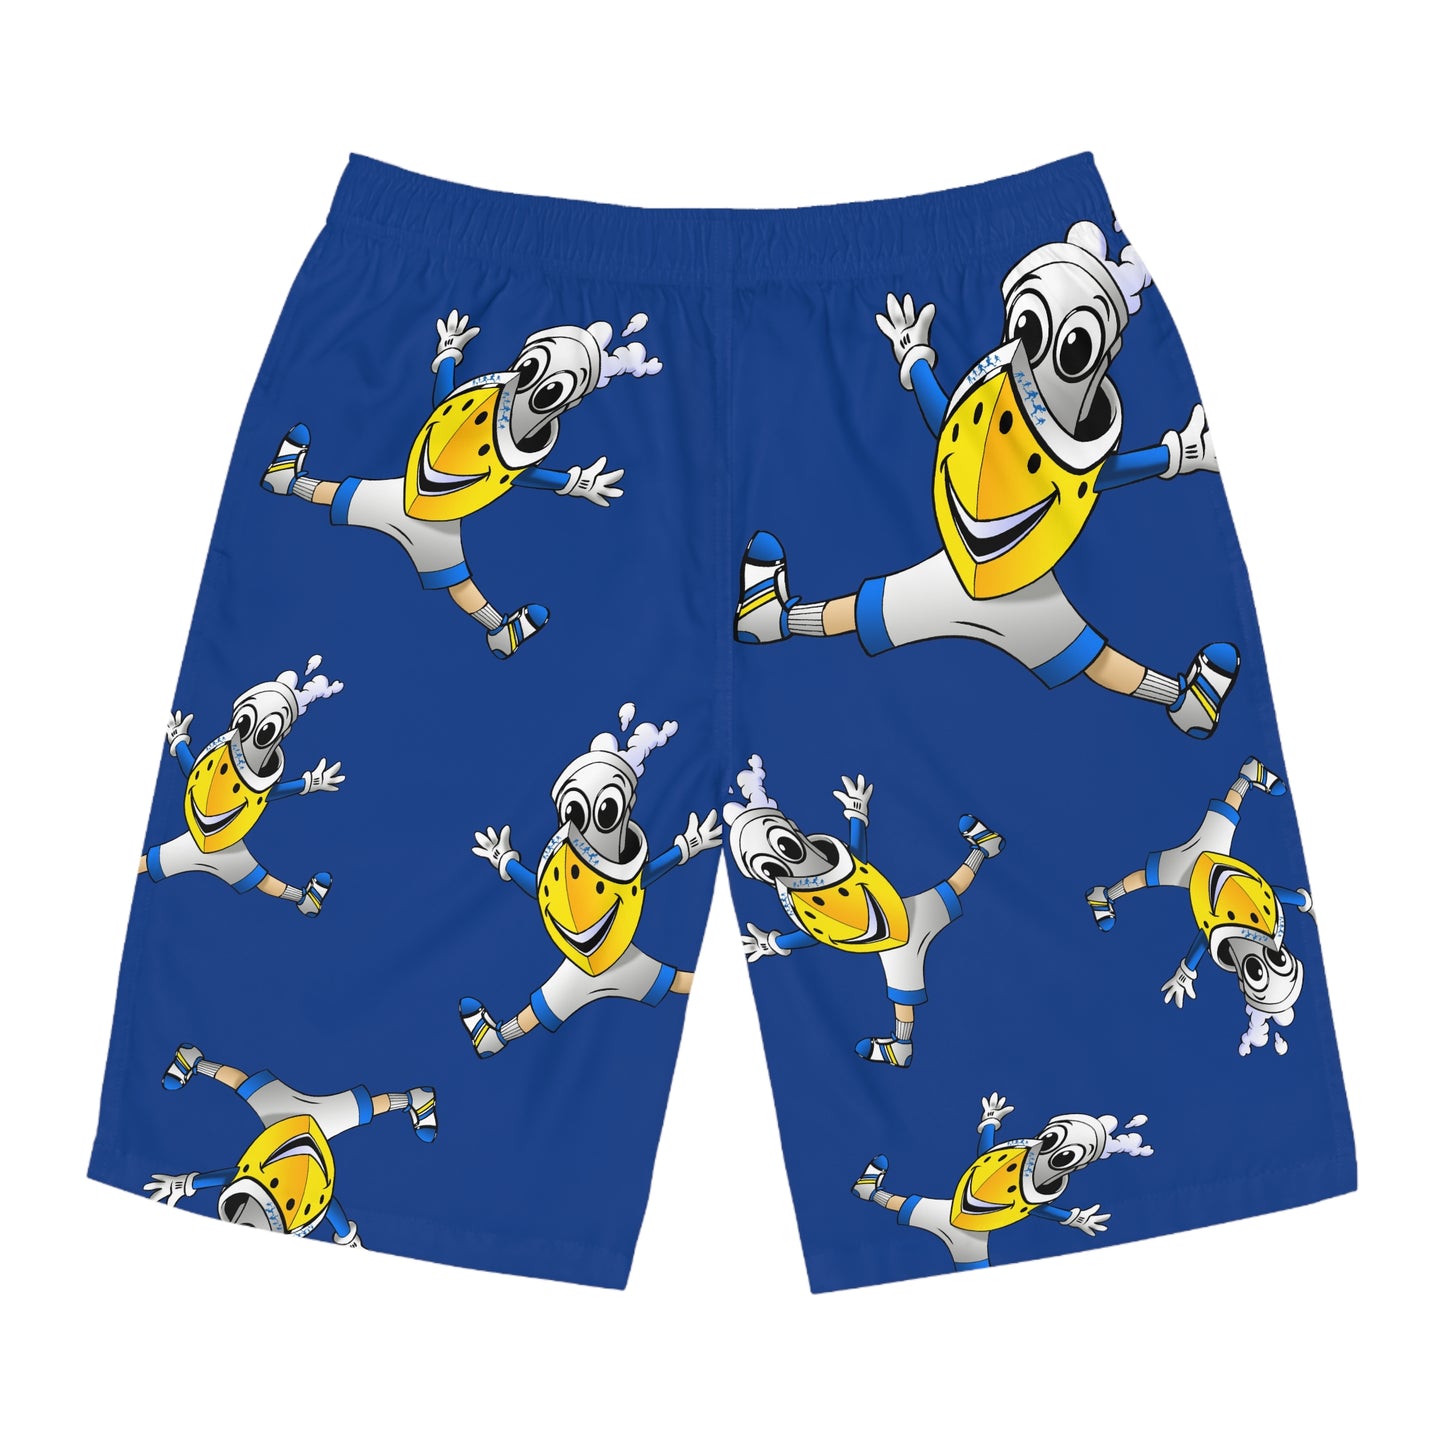 Crazy BUDDY CRUISE Men's DARK BLUE Board Shorts